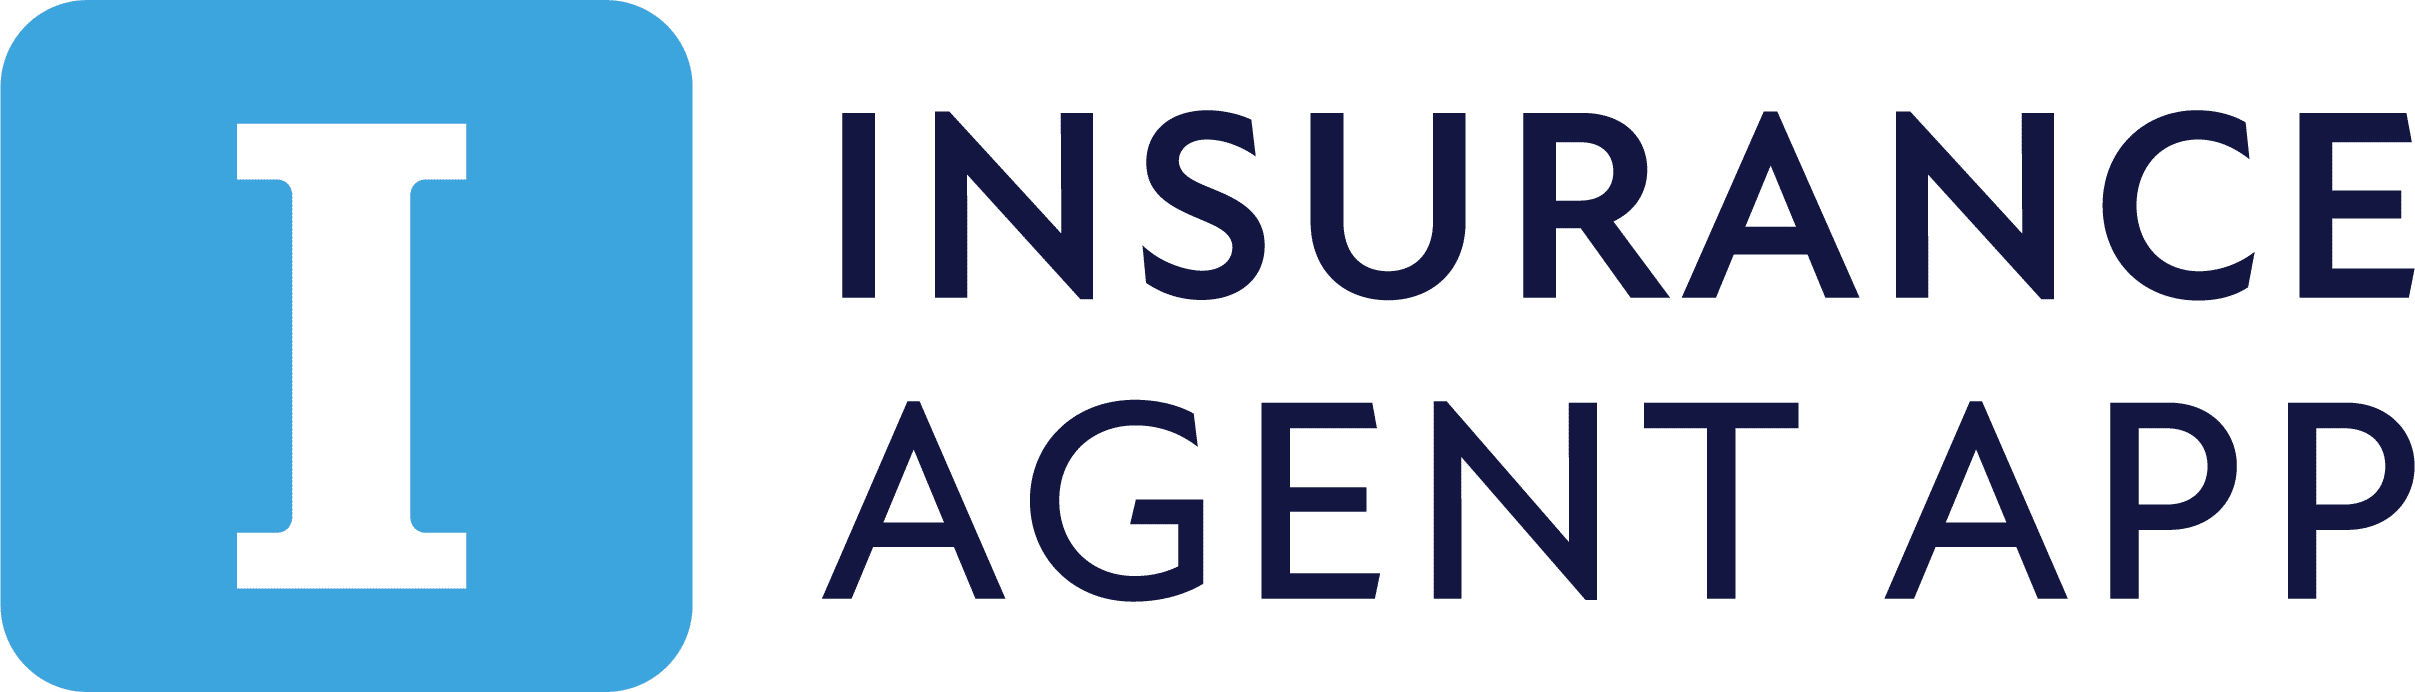 Insurance Agent App